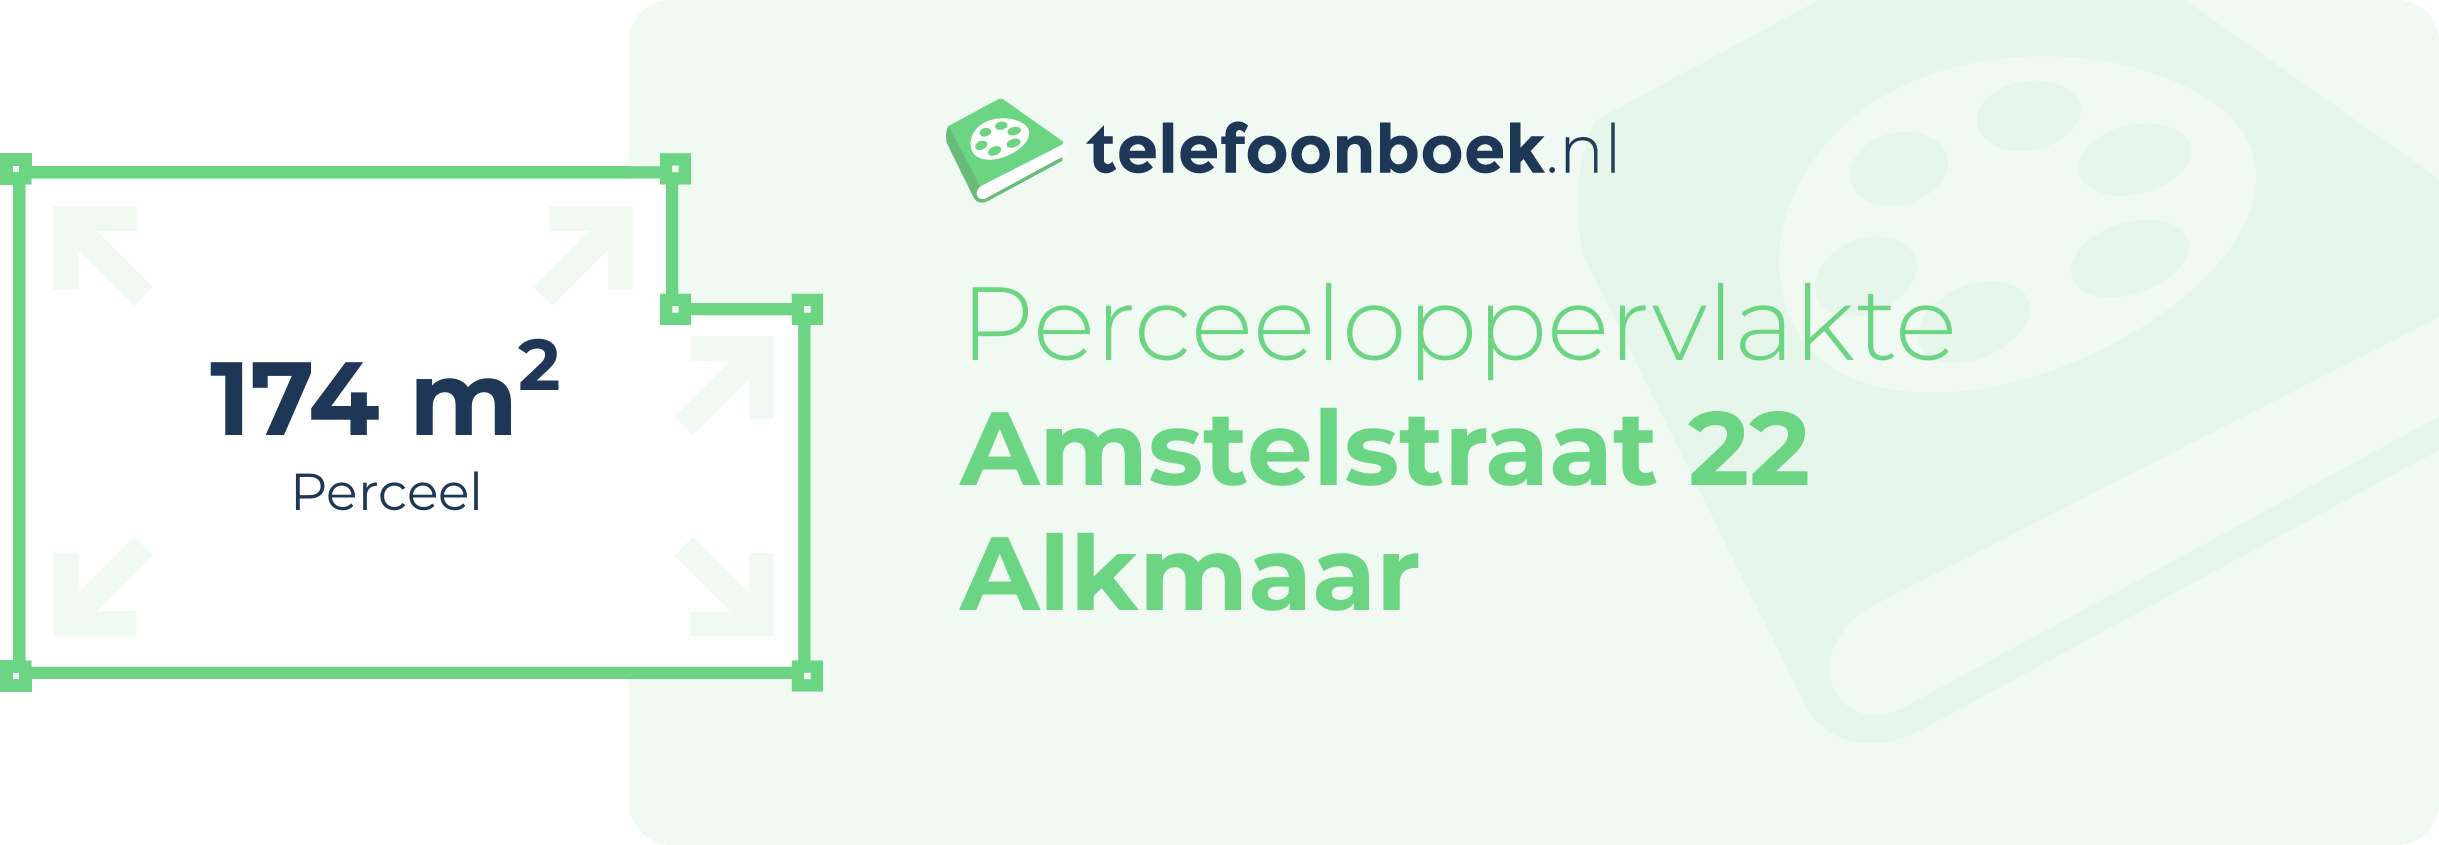 Perceeloppervlakte Amstelstraat 22 Alkmaar